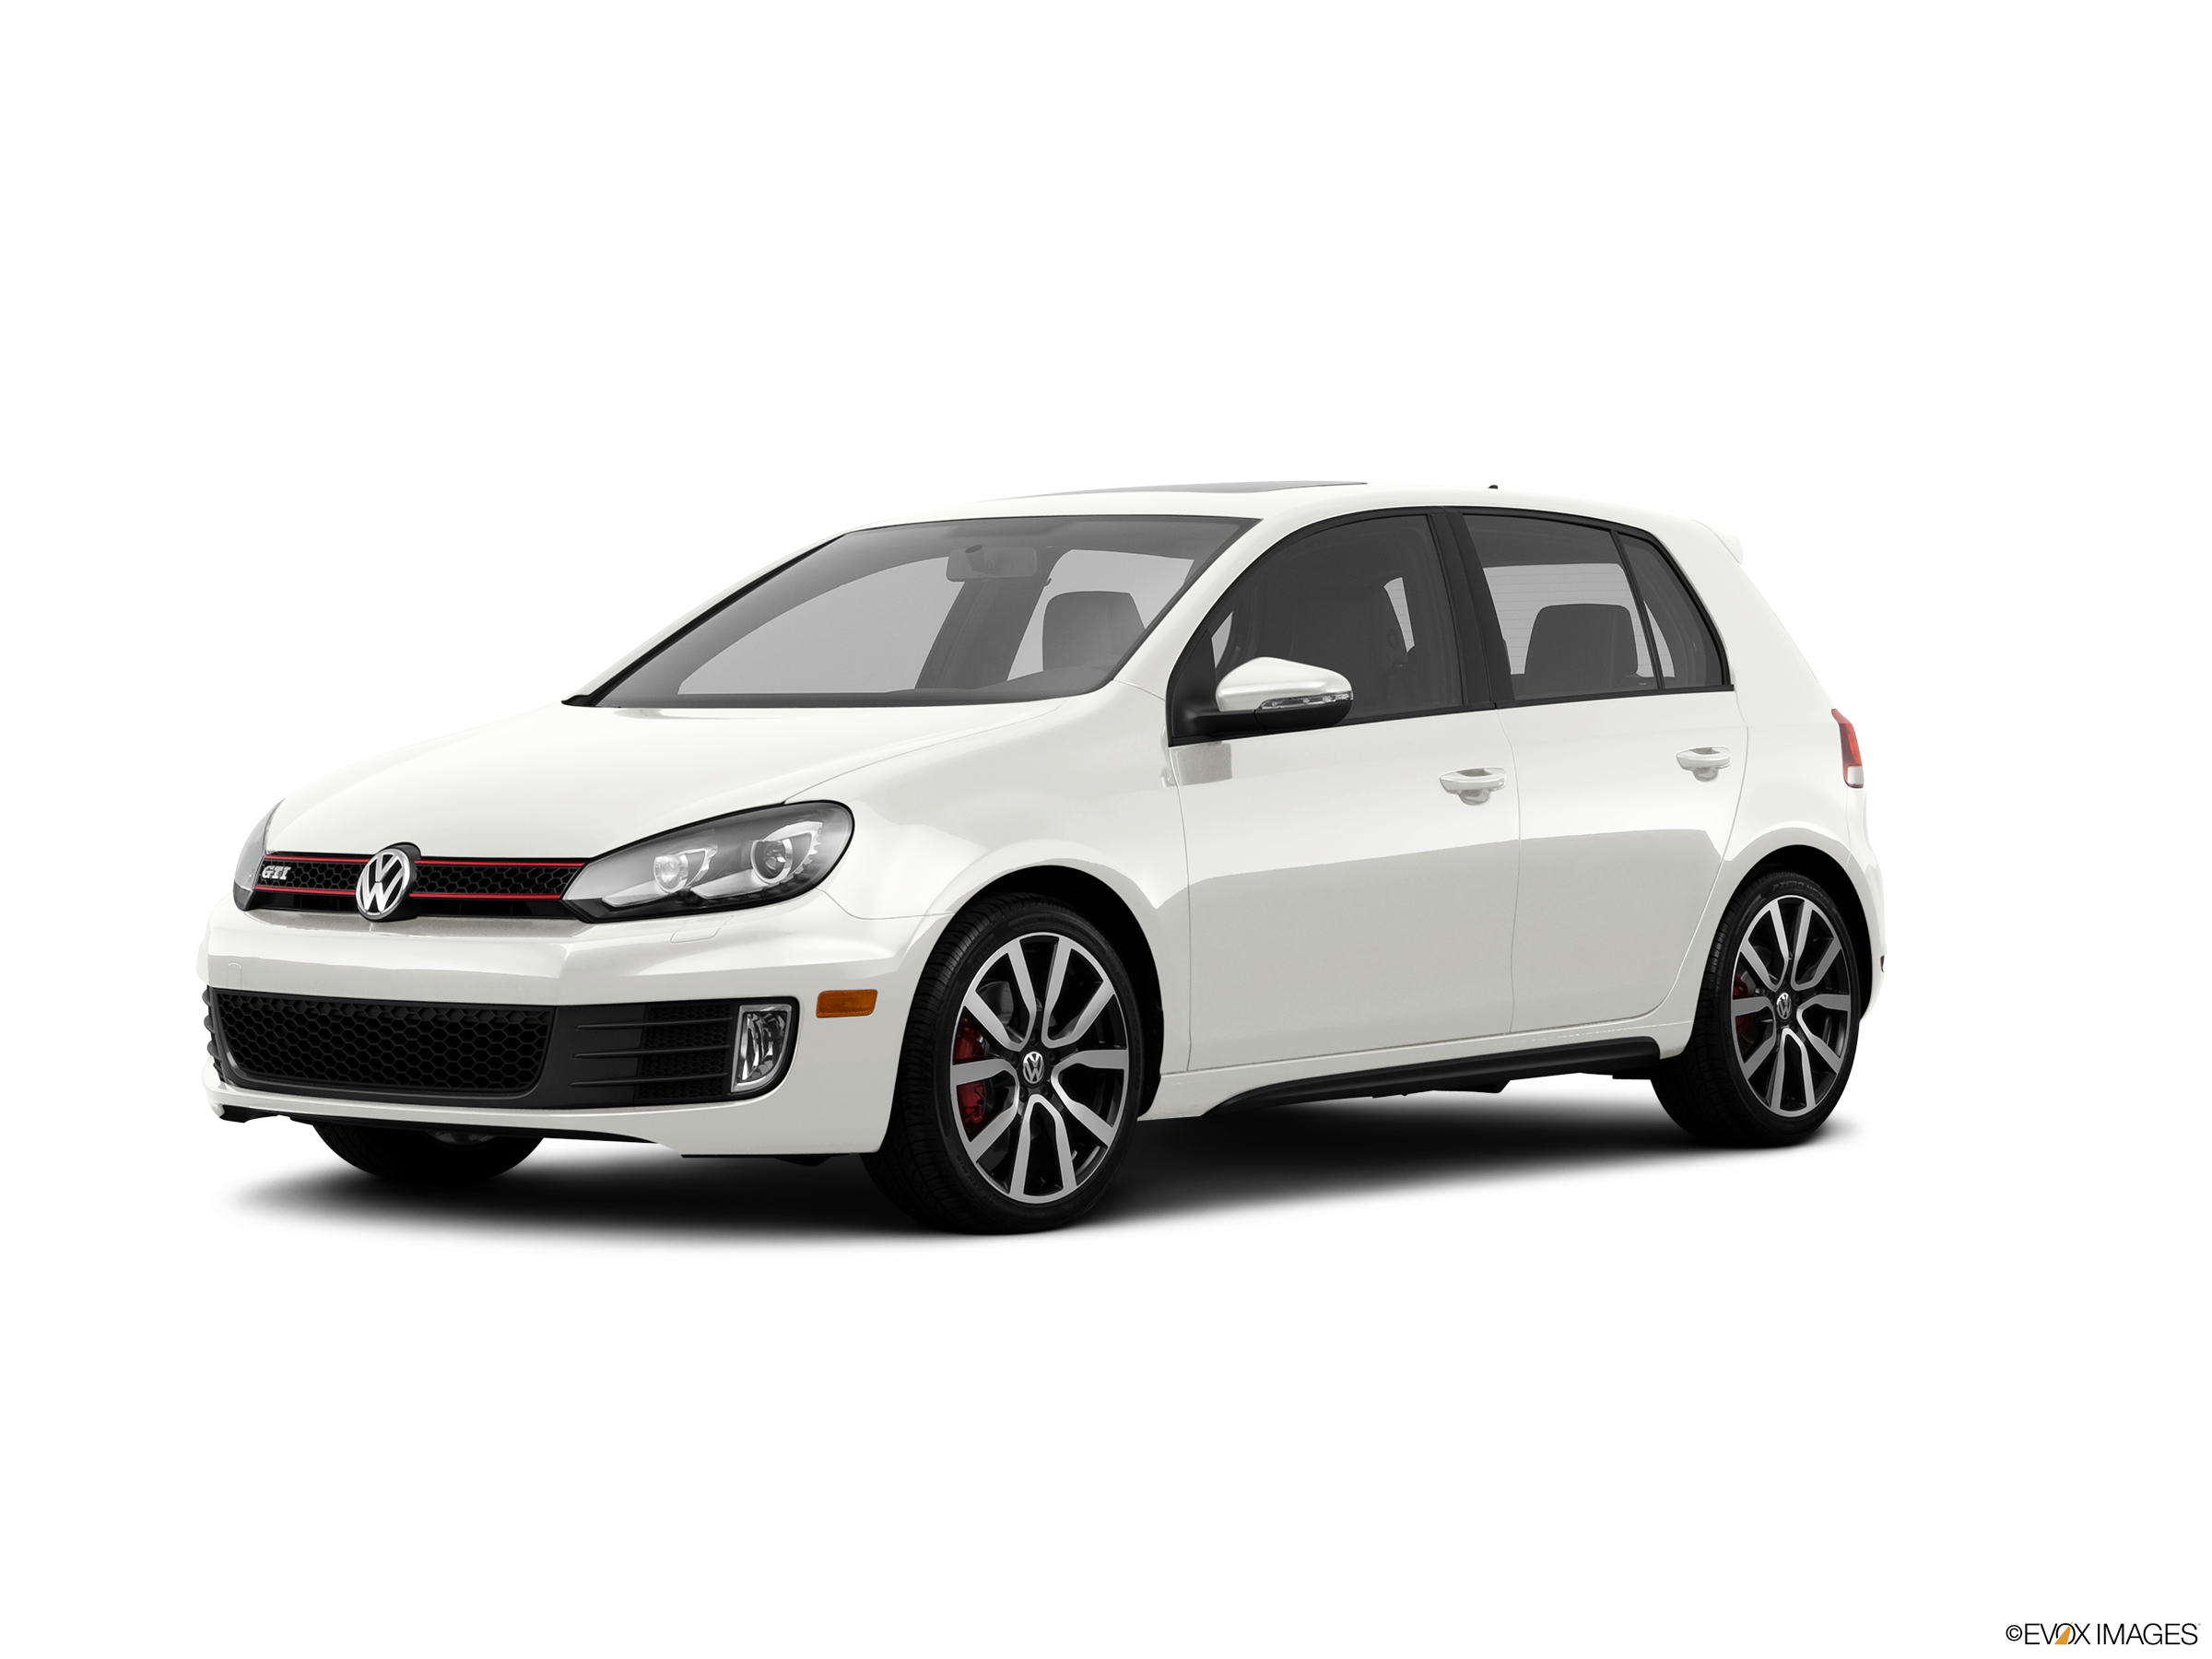 Used Volkswagen Golf GTI 2013-2017 review